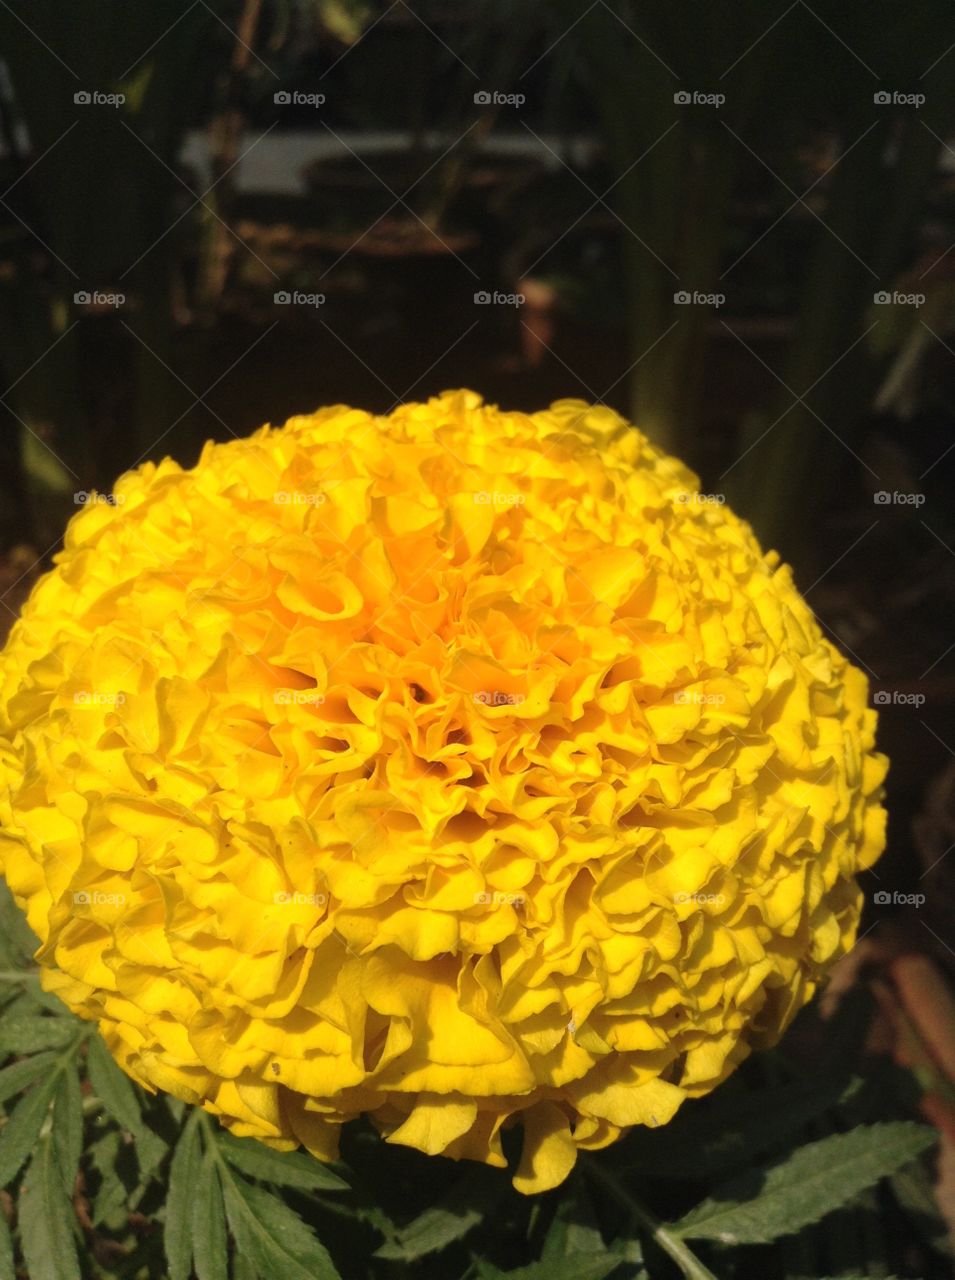 Australia flower close up